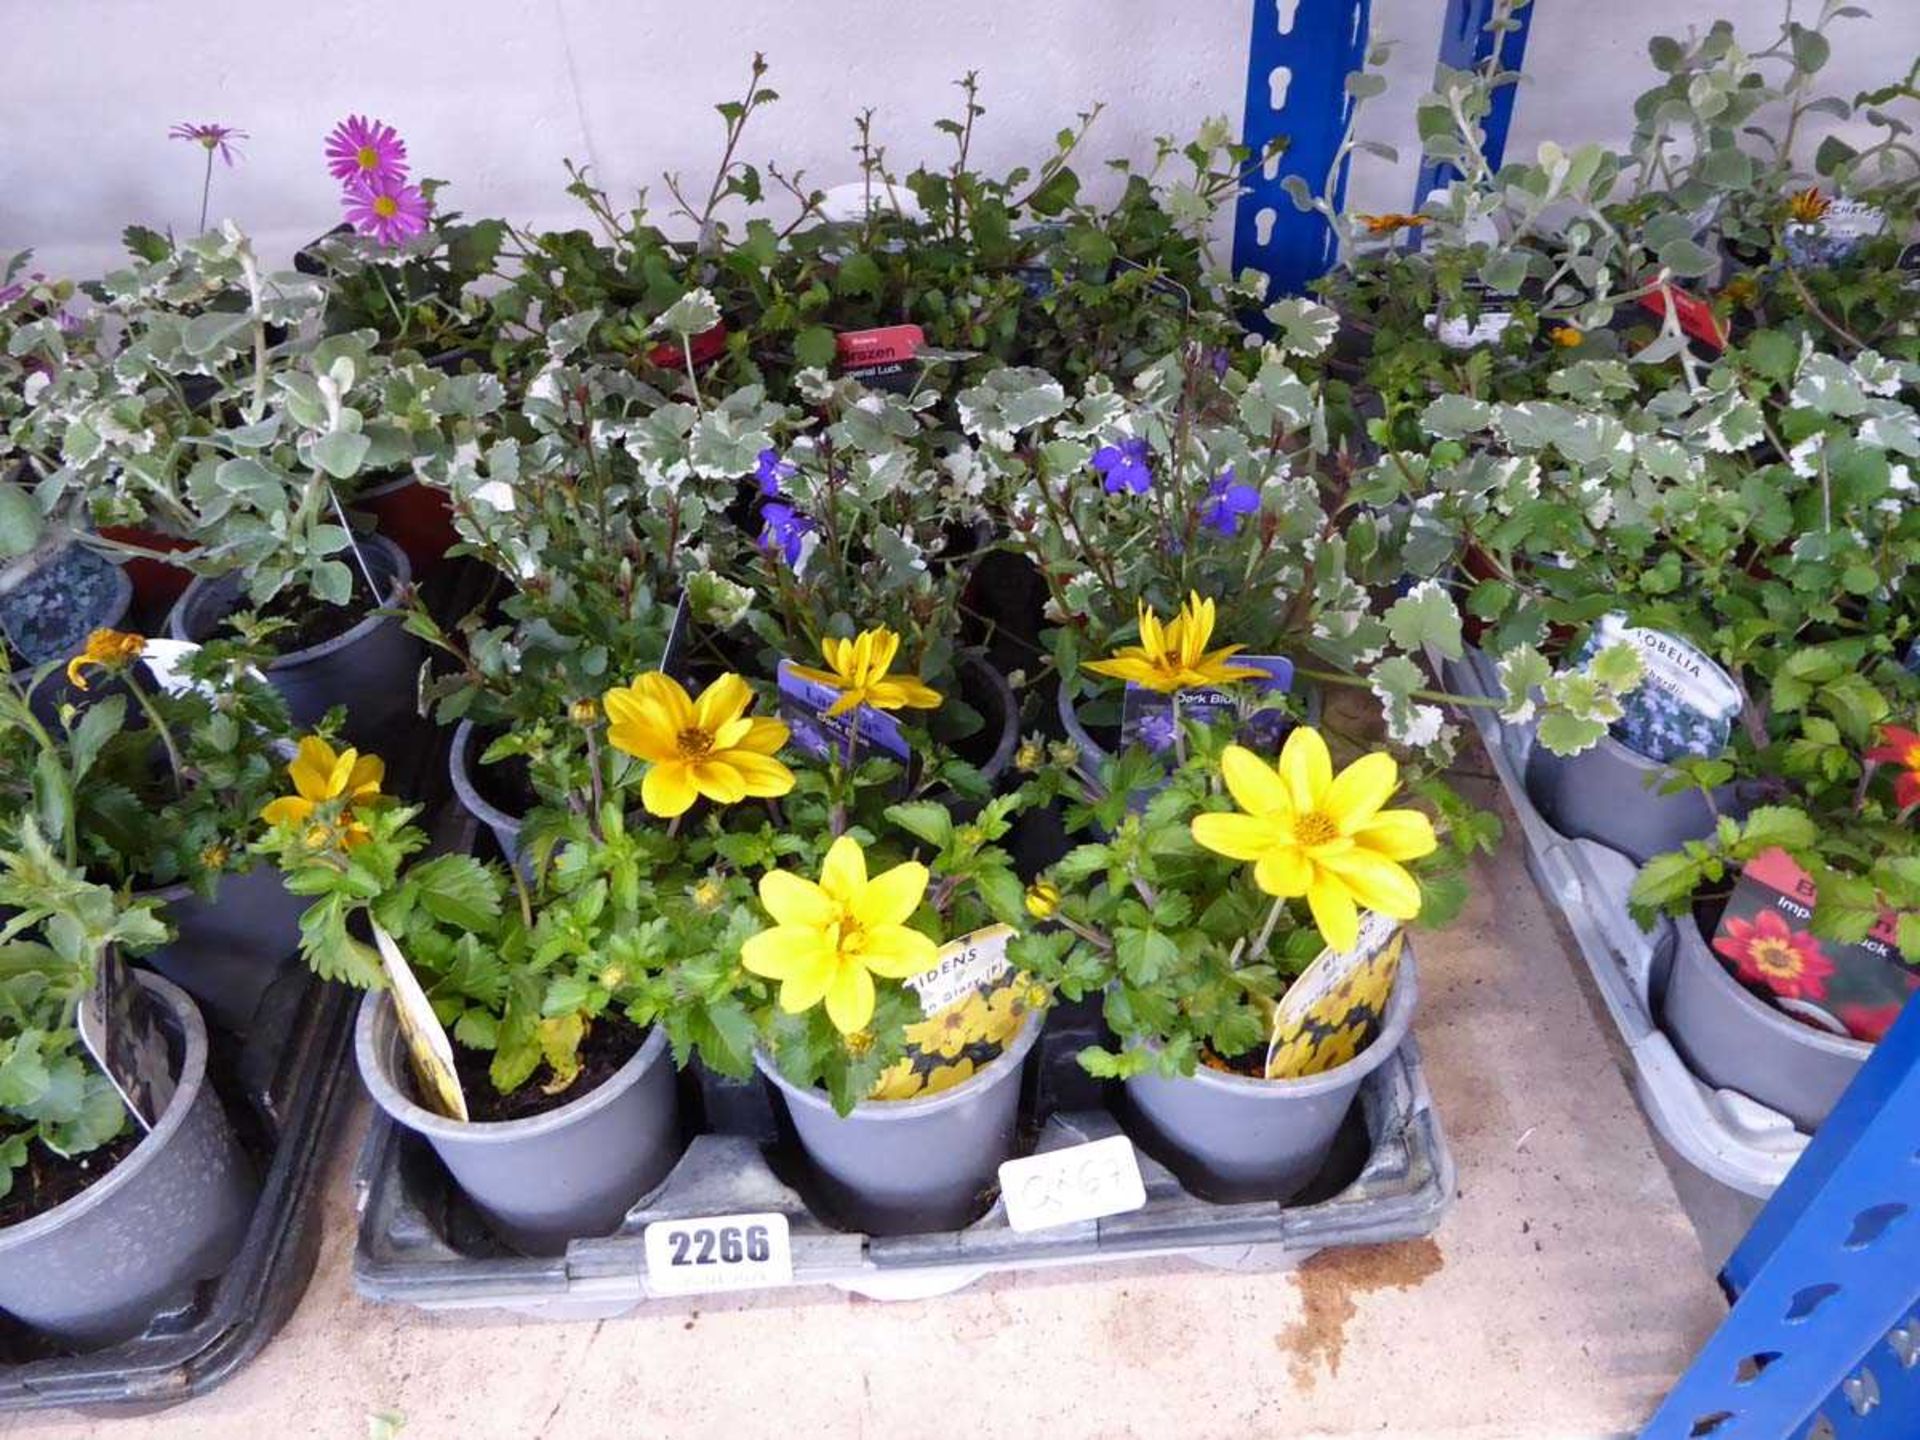 Tray containing 15 pots of mixed plants to include lobelia, brazen, helichrysum